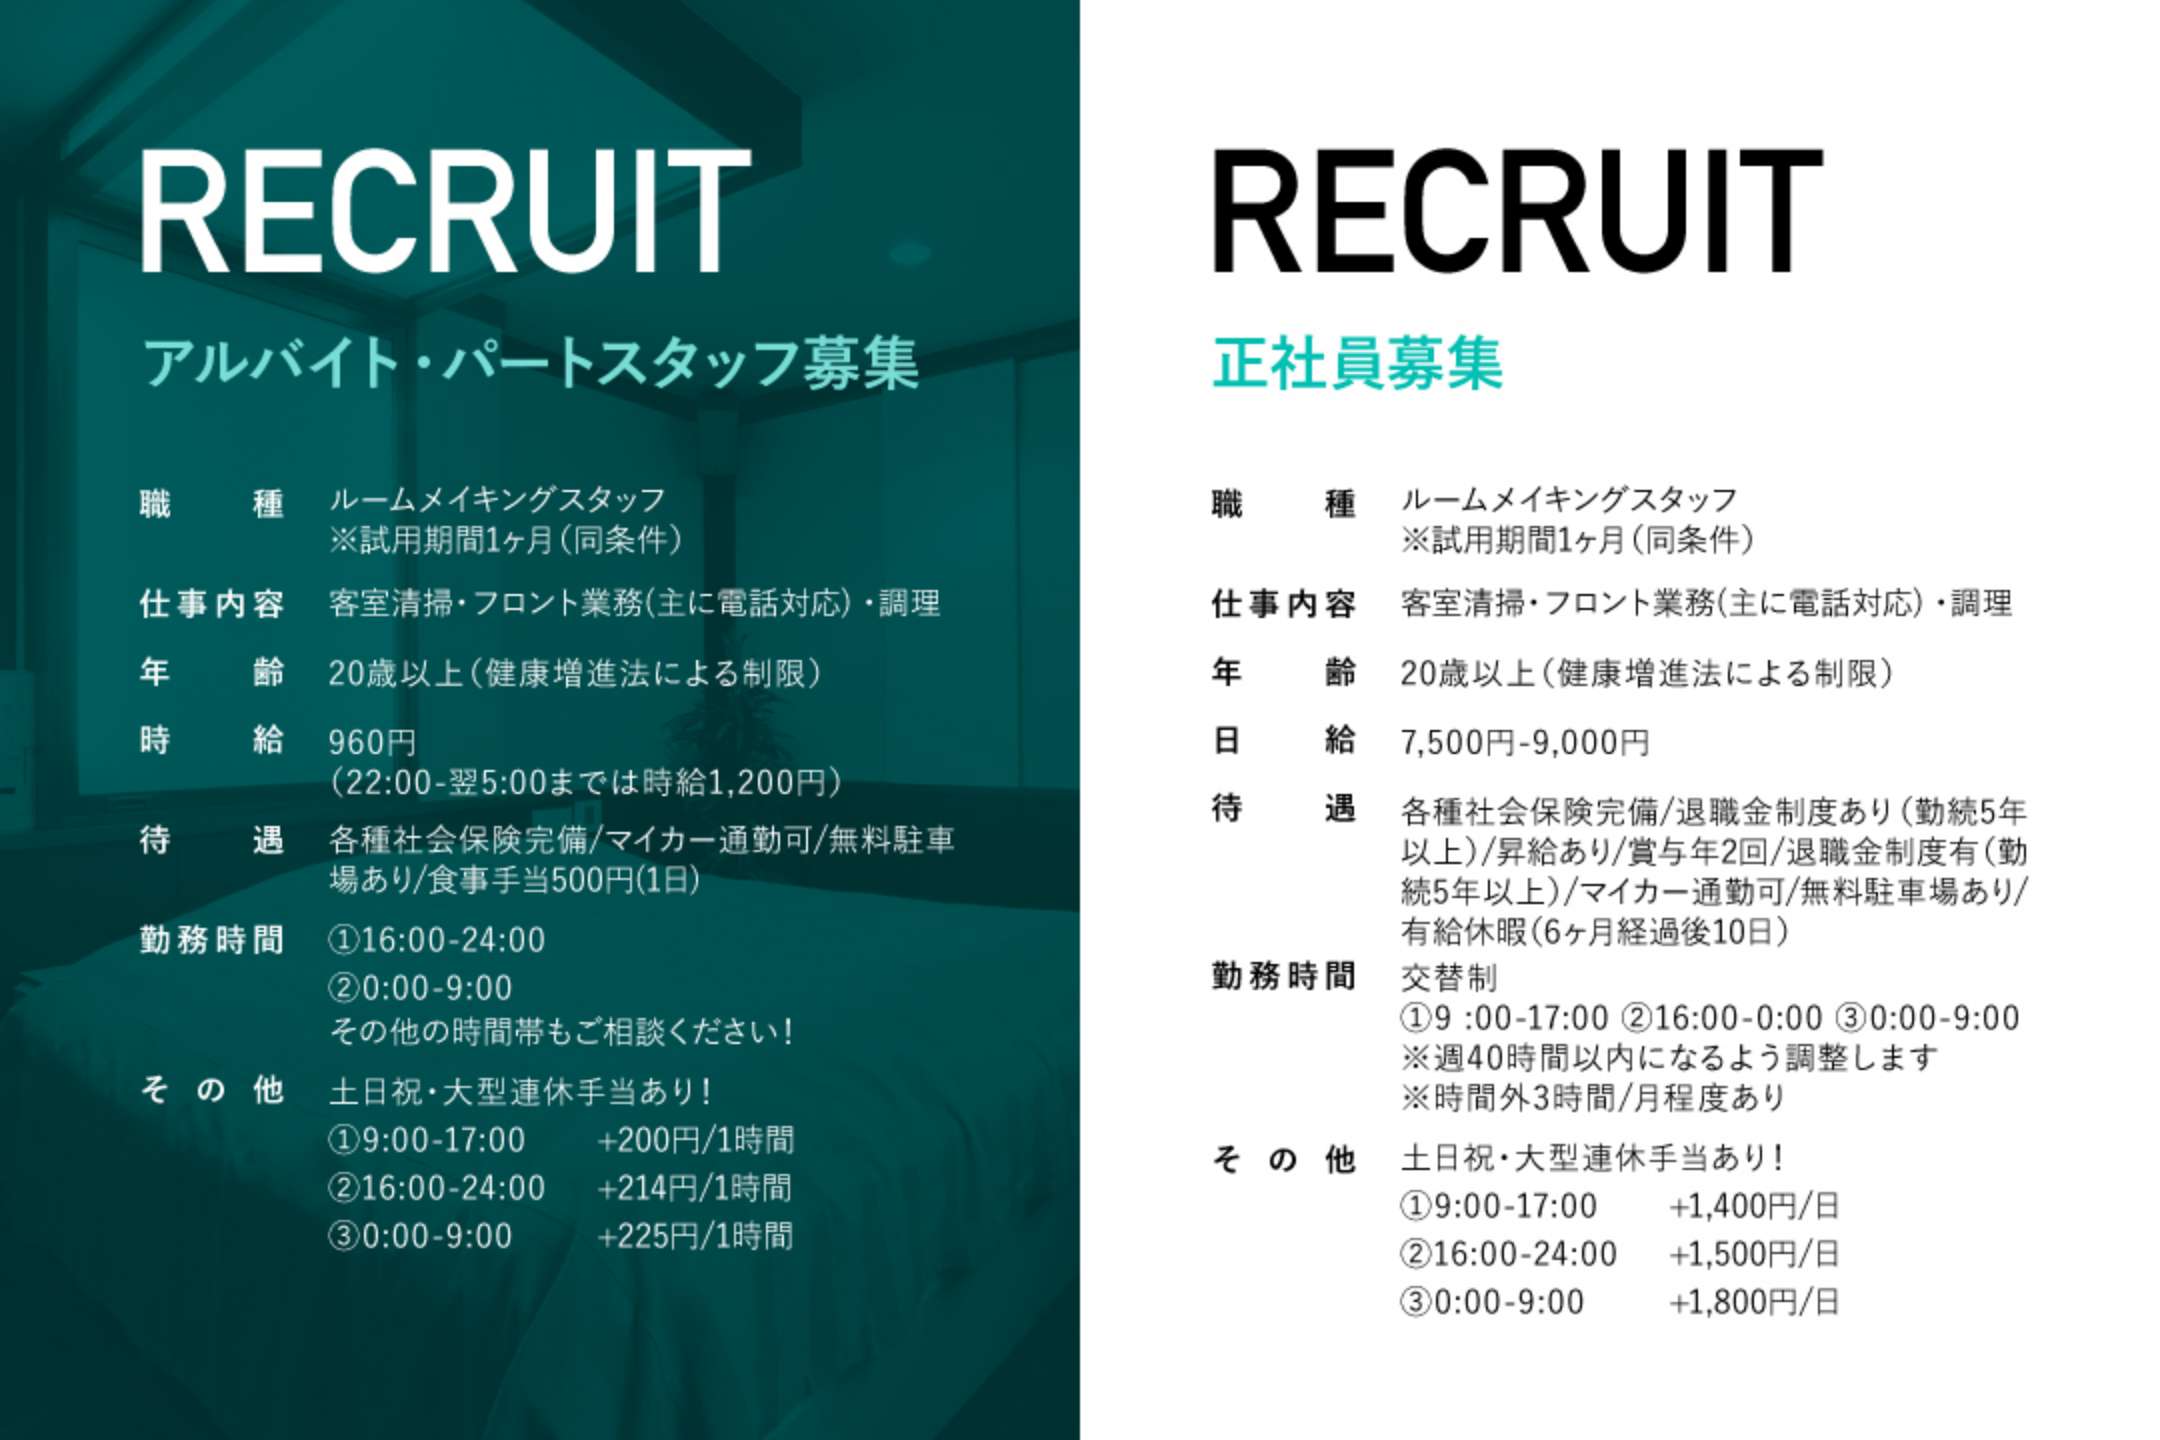 recruit